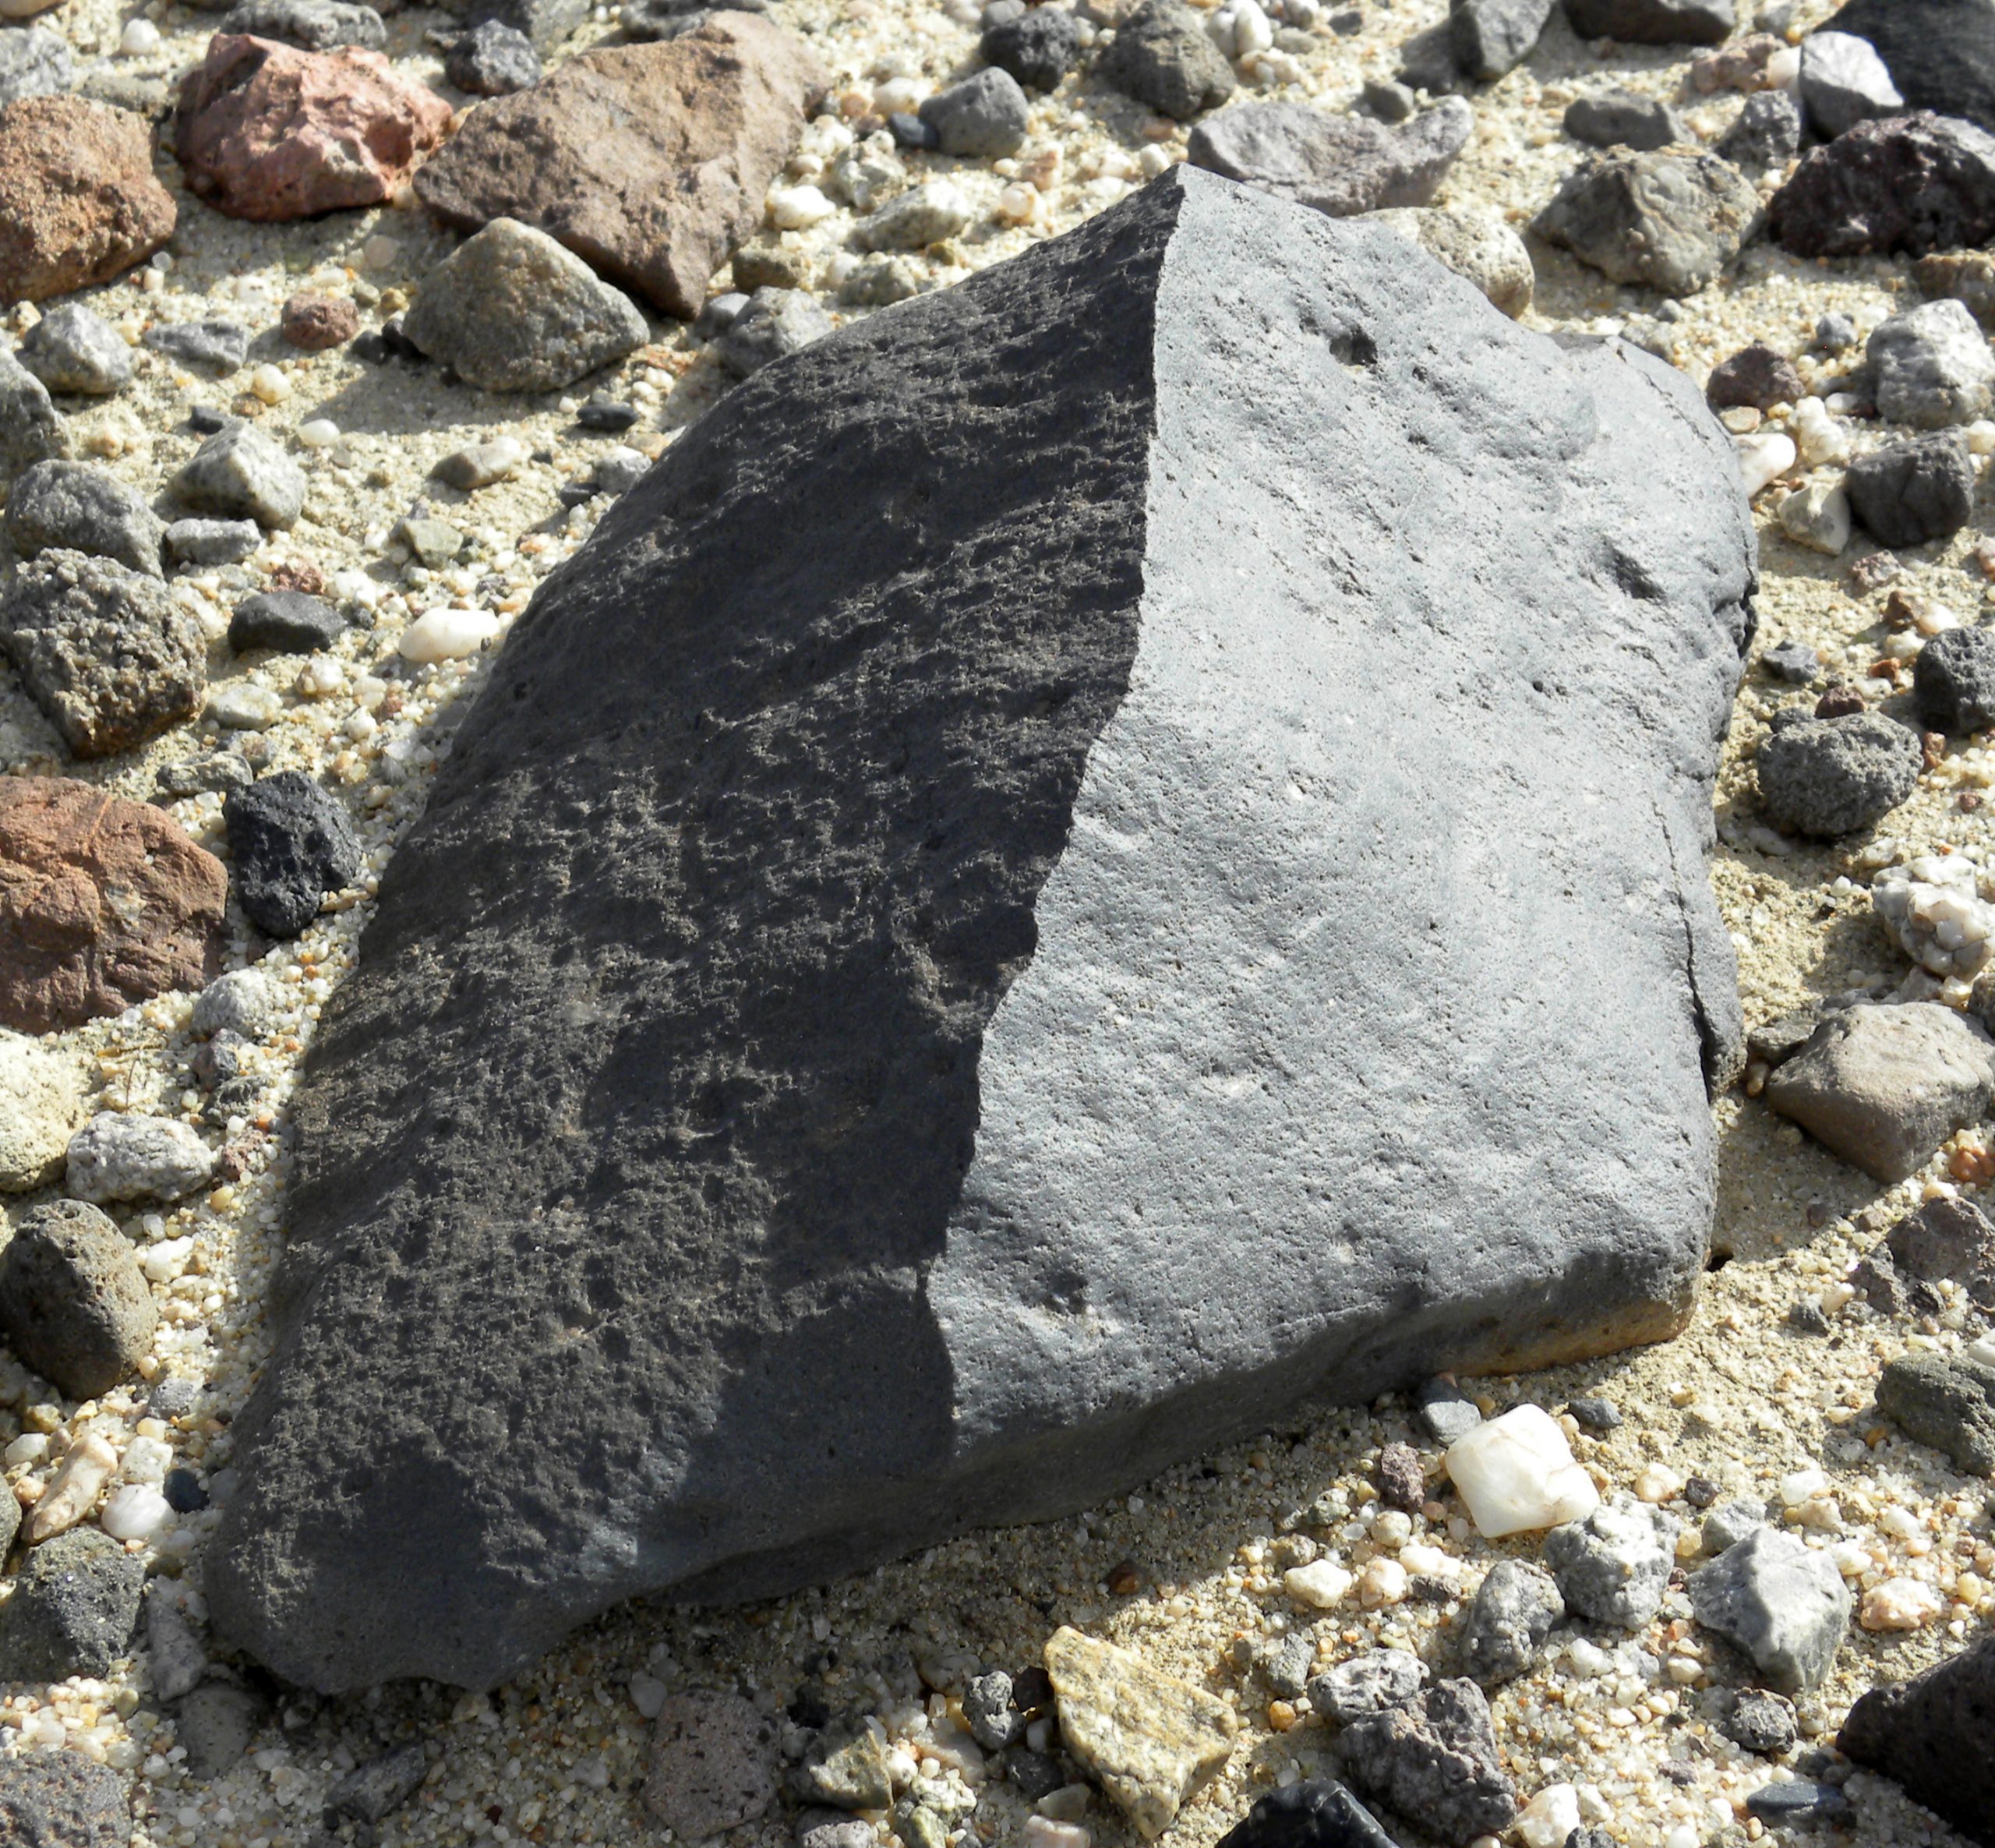 Rock on desert floor polished on multiple sides by sandblasting.